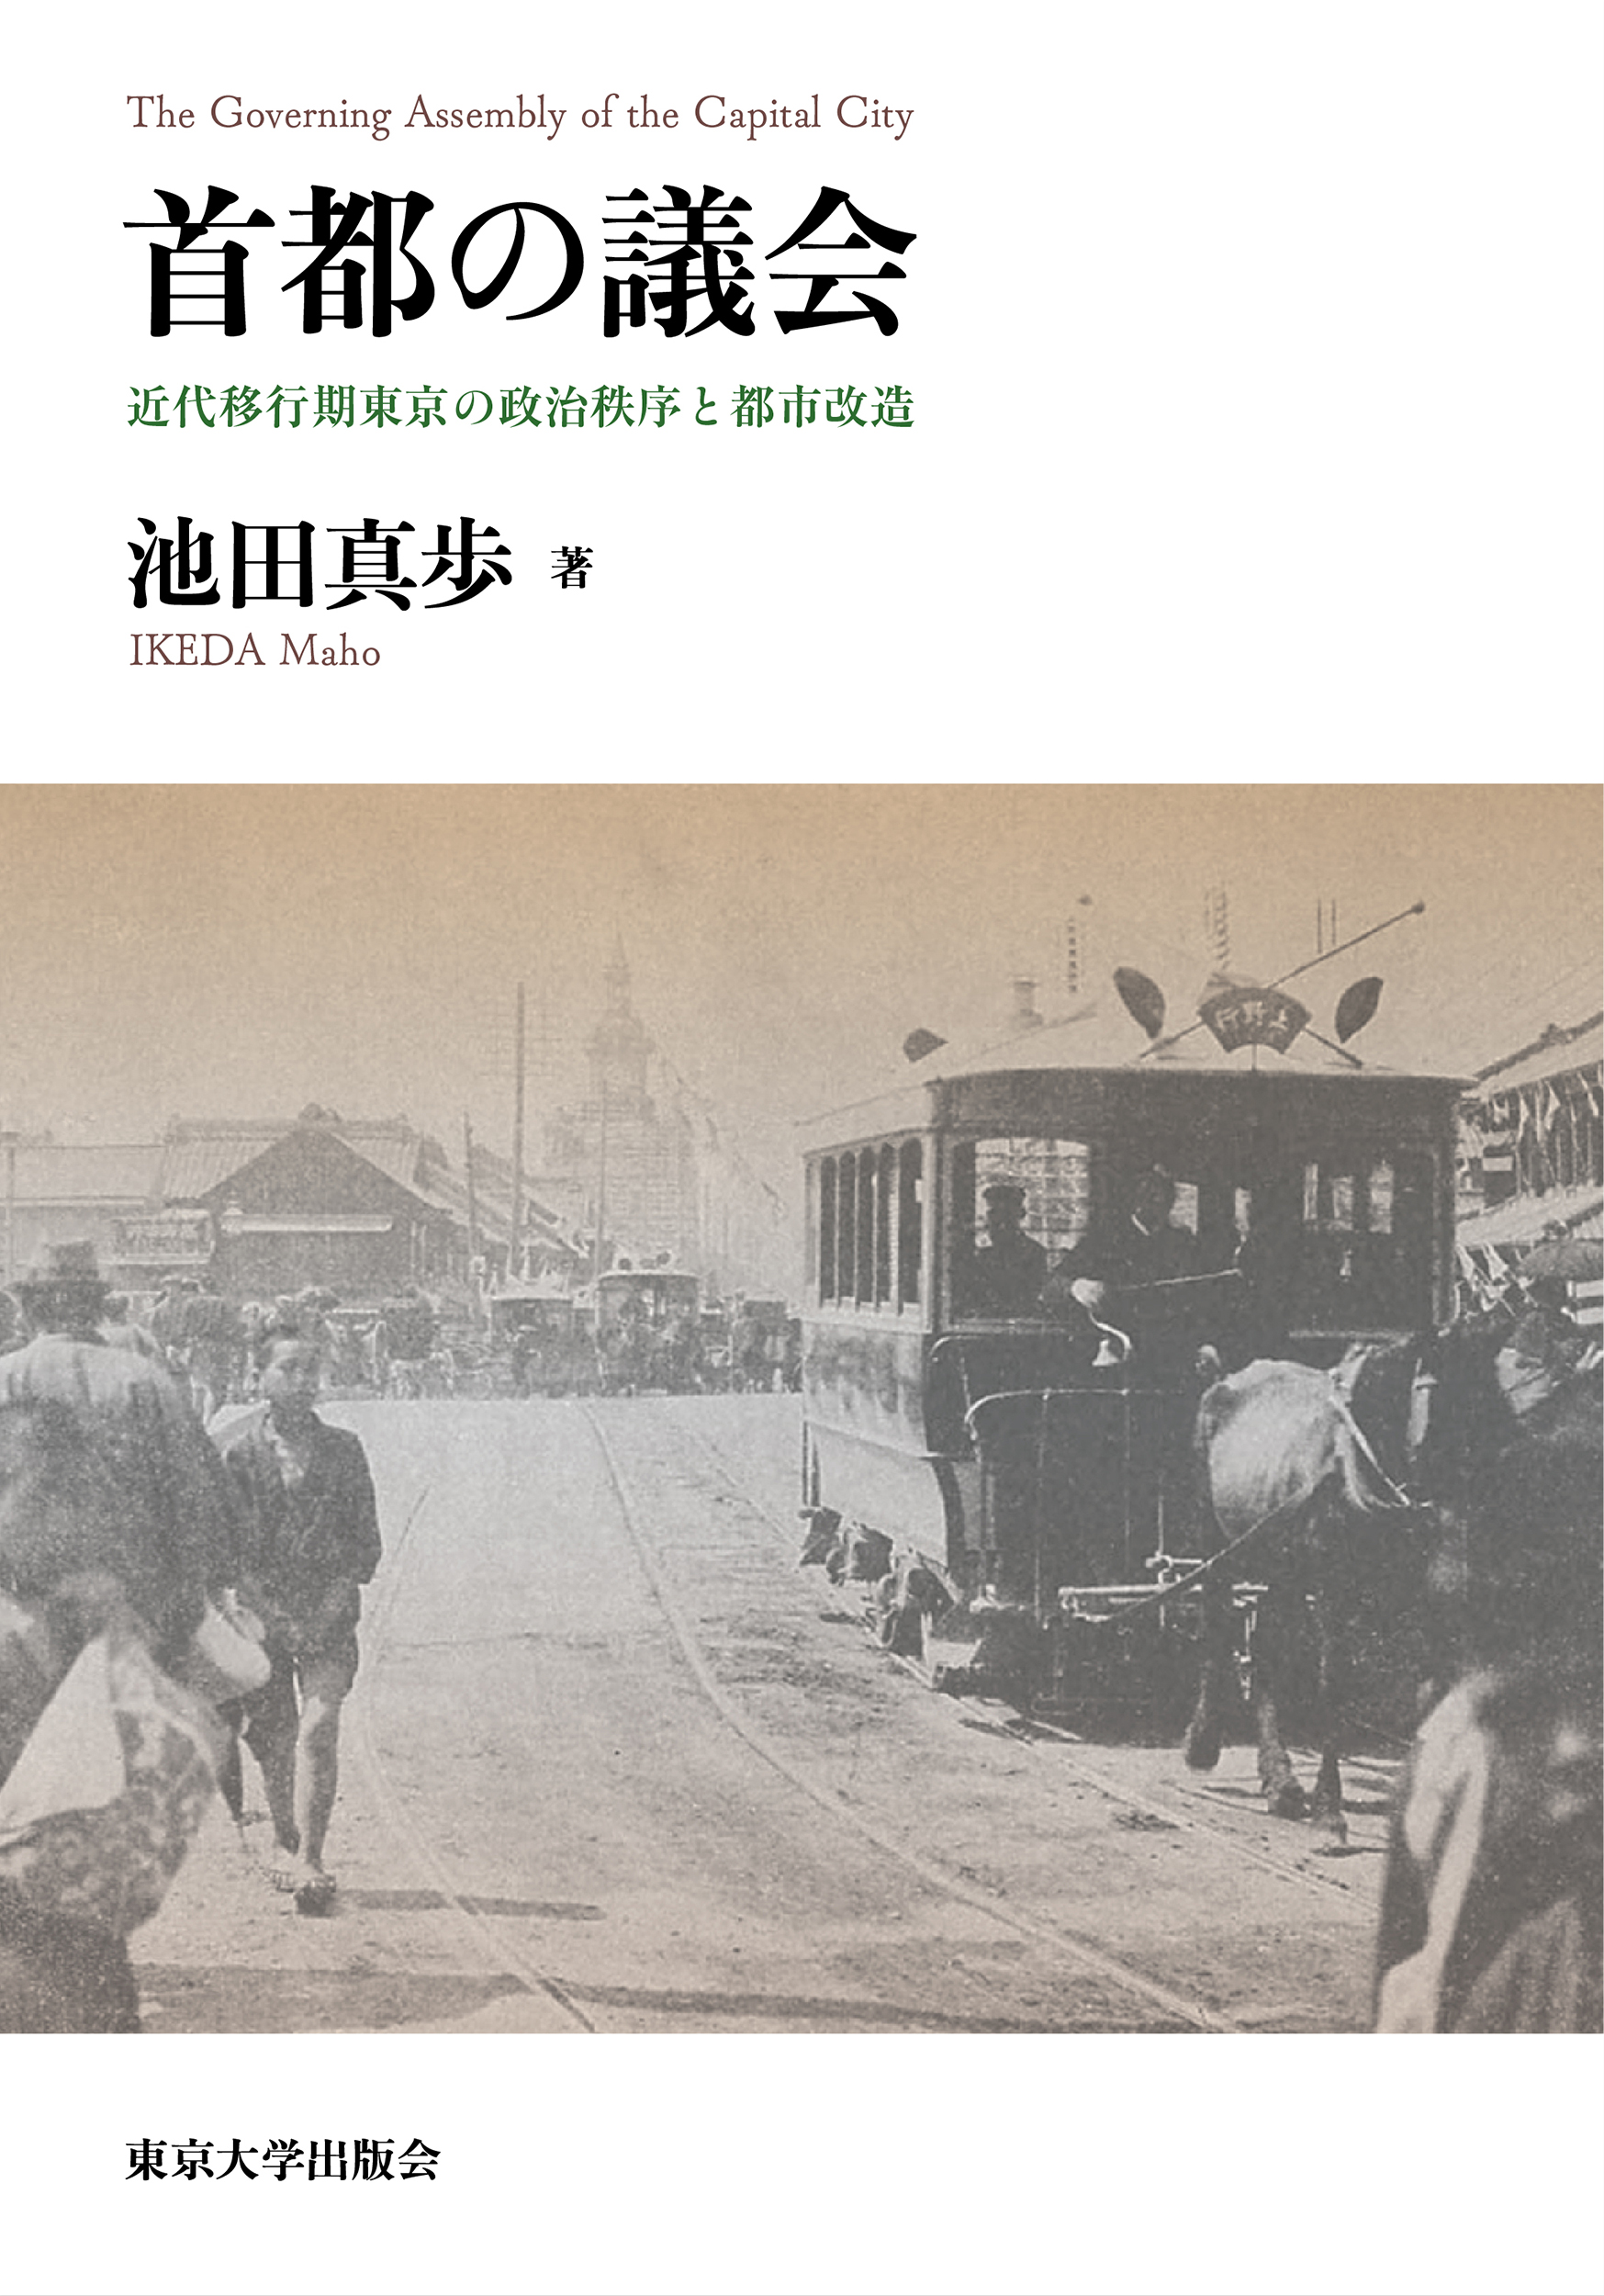 A picture of the Tokyo Basha Tetsudo train through Nihonbashi in 1900